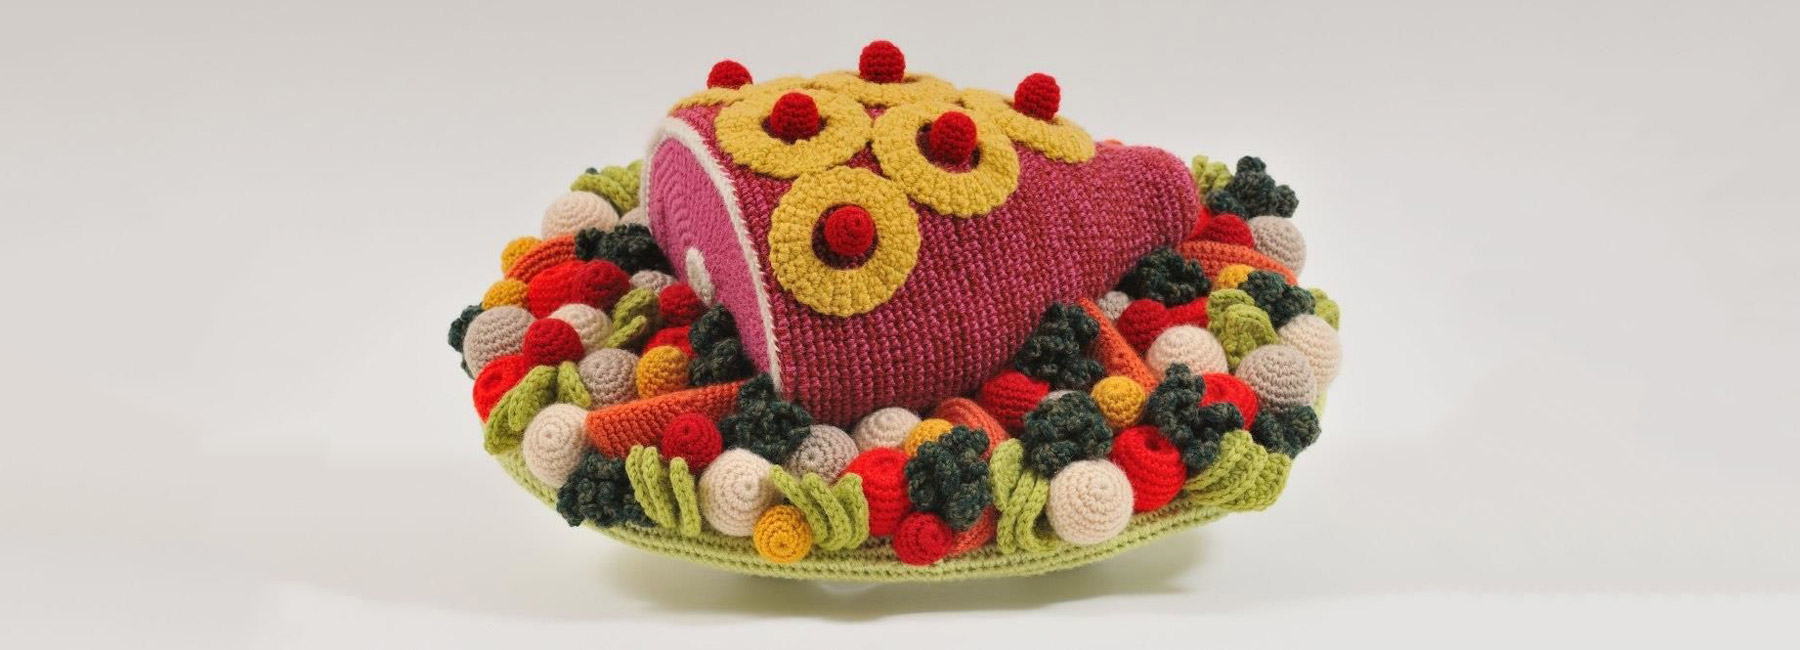 Crocheted food7